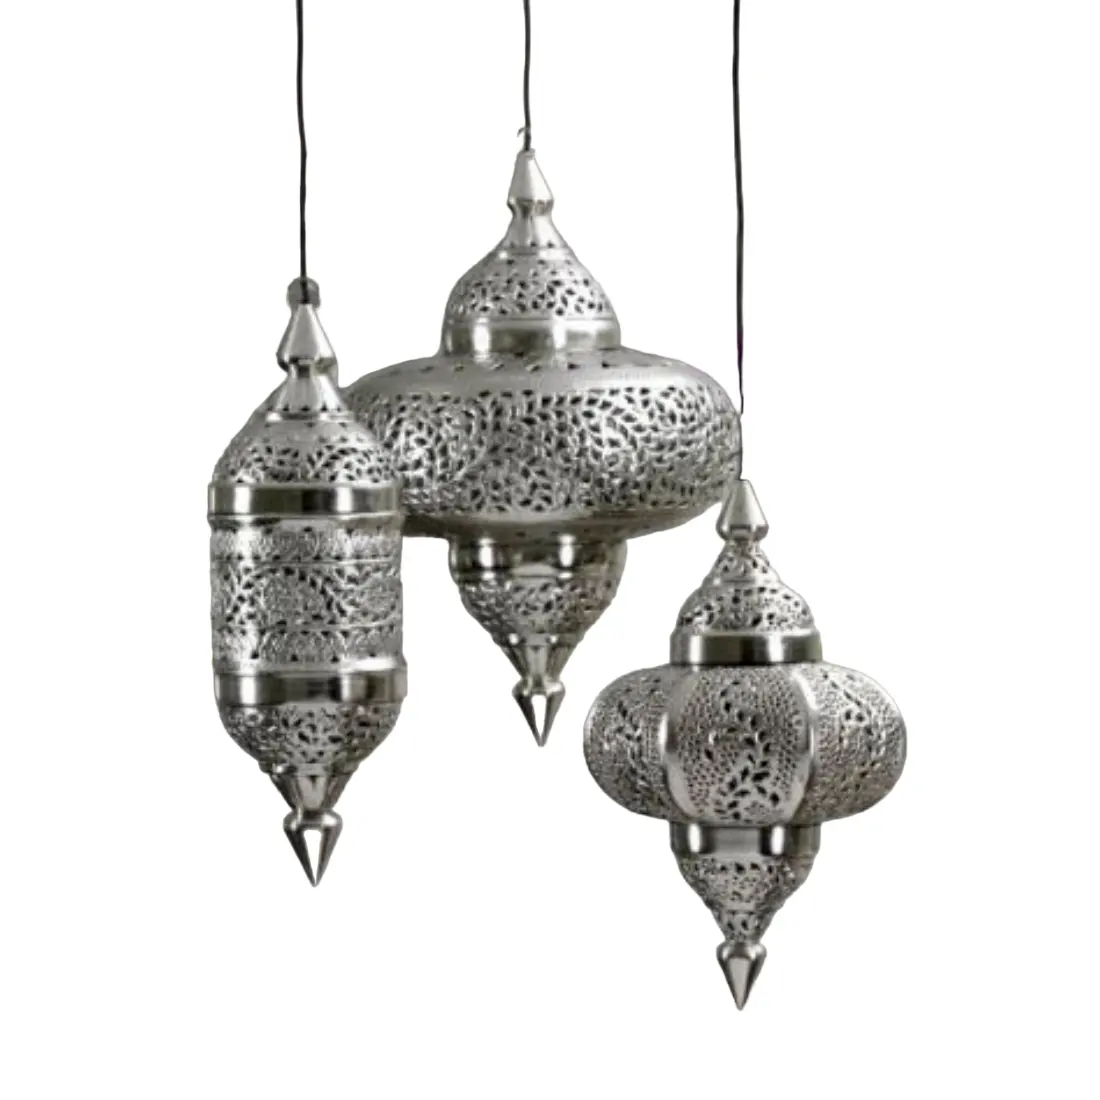 Set of 3 different sizes metal stainless steel hanging lantern customized shape mirror polished home decoration metal lanterns